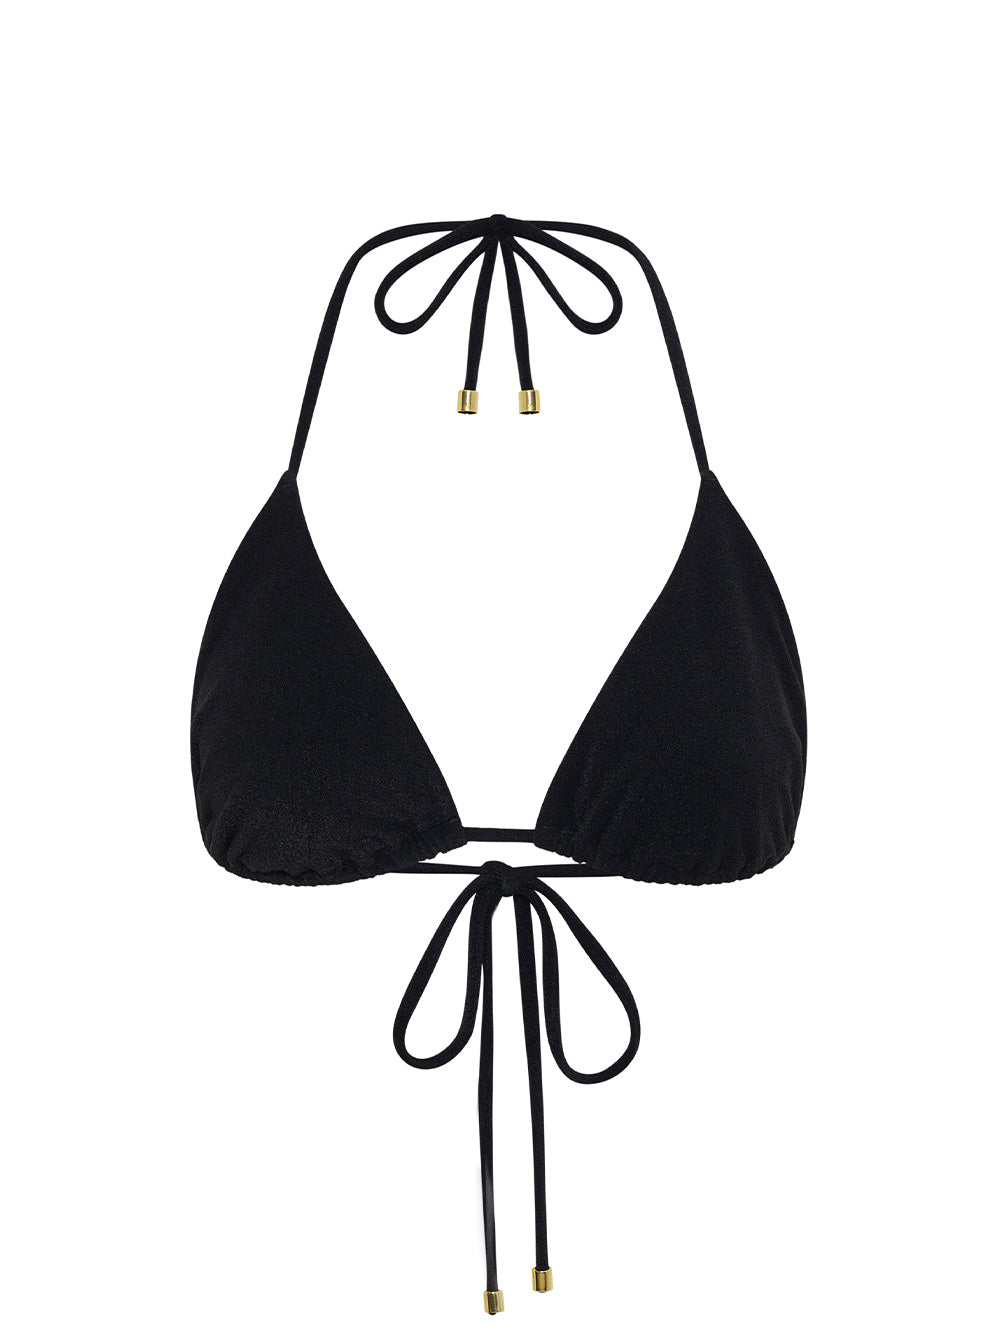 Charlotte Halterneck Bikini Top KIVARI | Black triangle bikini top